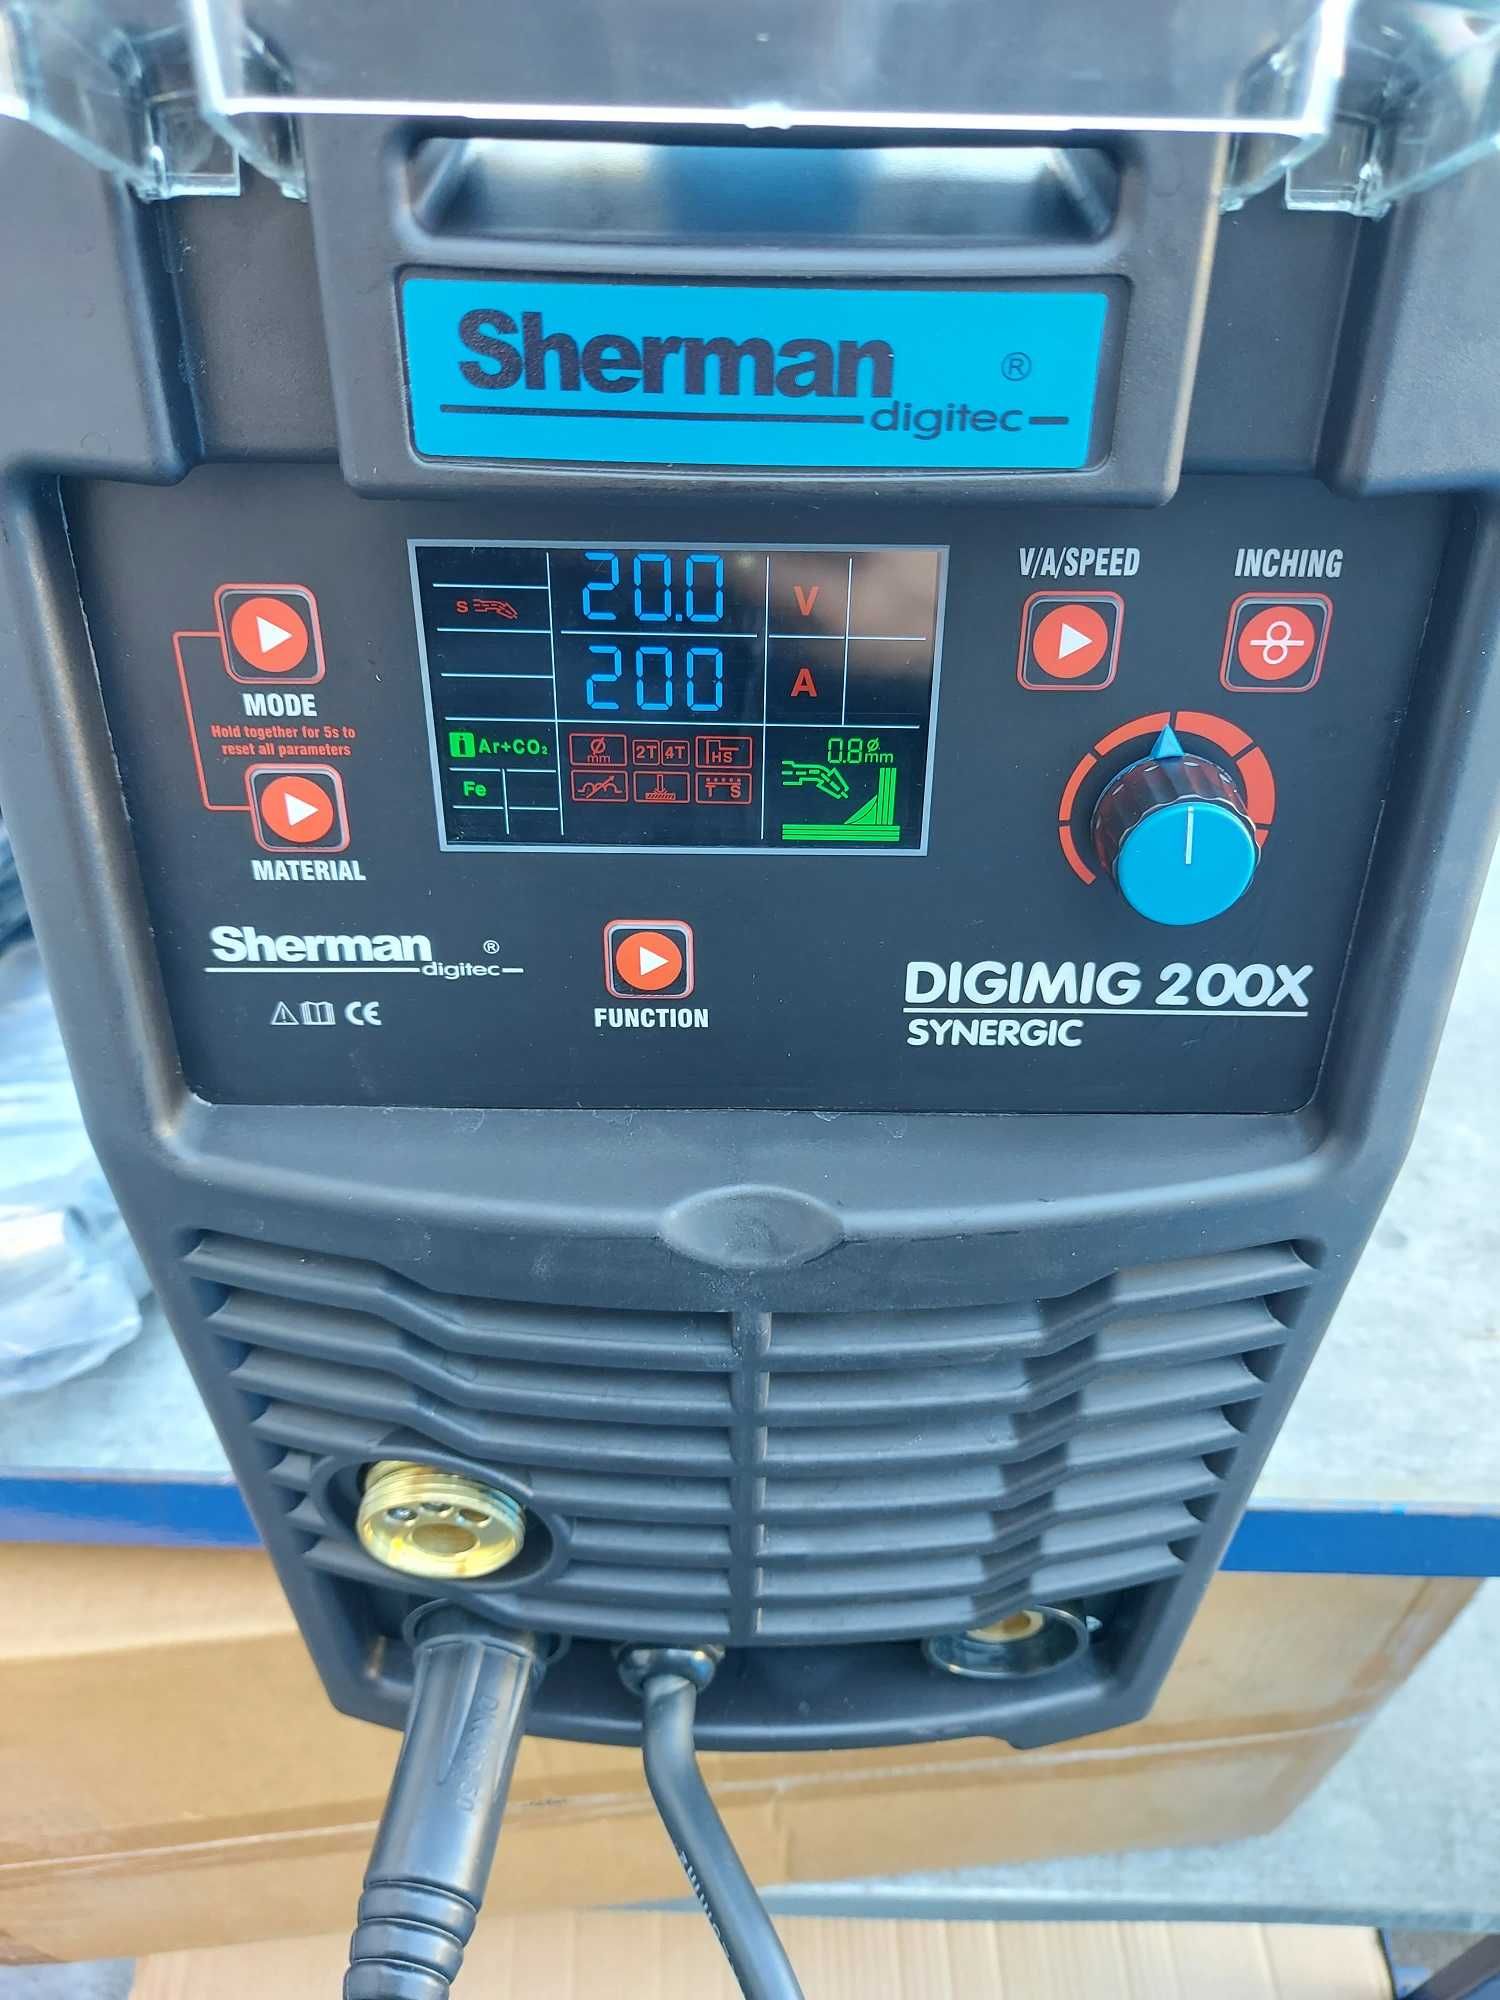 Sherman DIGIMIG 200X Synergic Spawarka 230v Migomat mig mag nowa